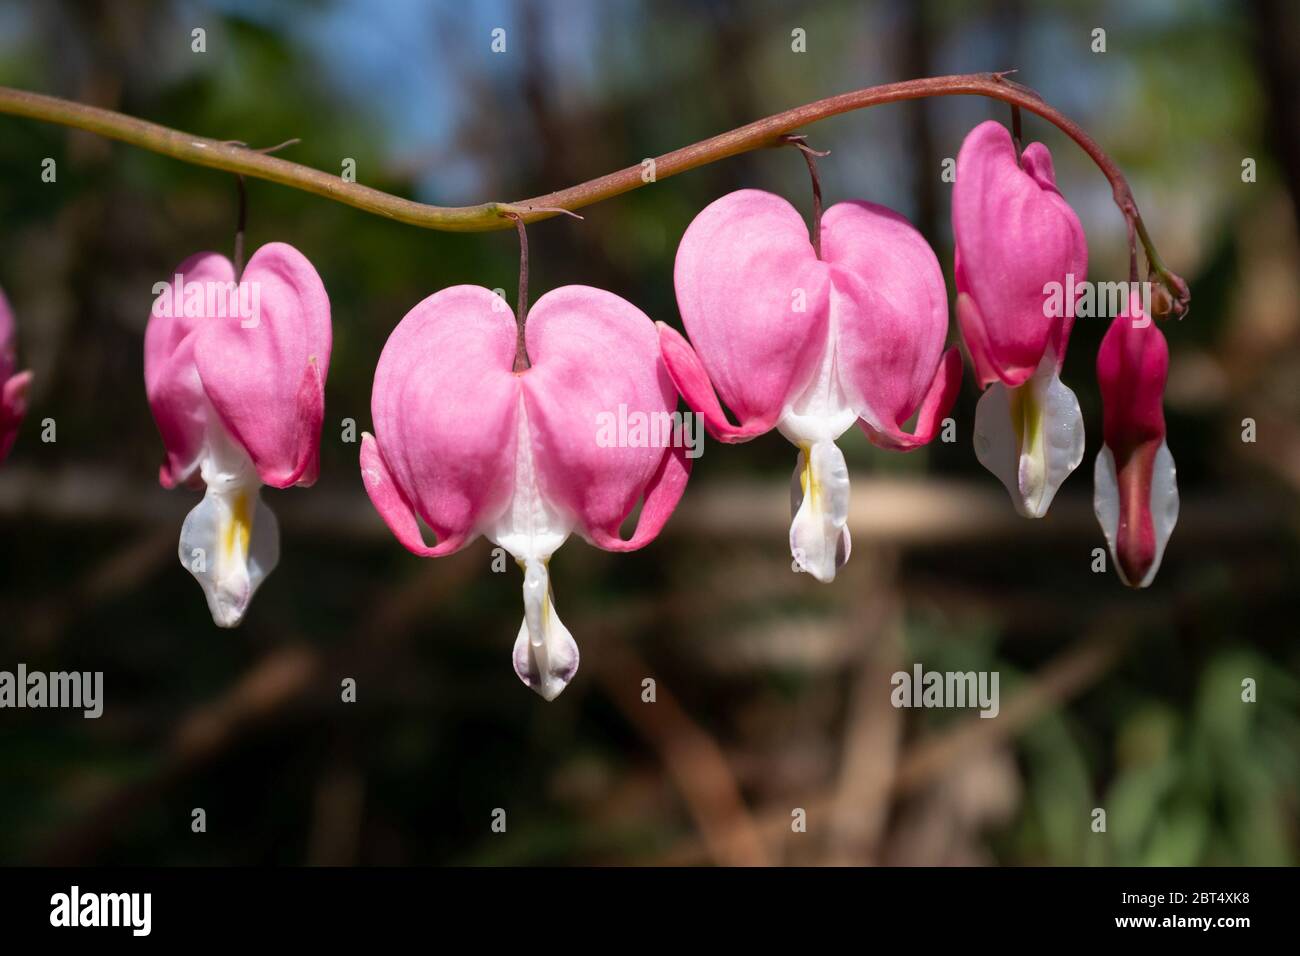 Flowers of Asian Bleeding Heart (Lamprocapnos spectabilis) Stock Photo